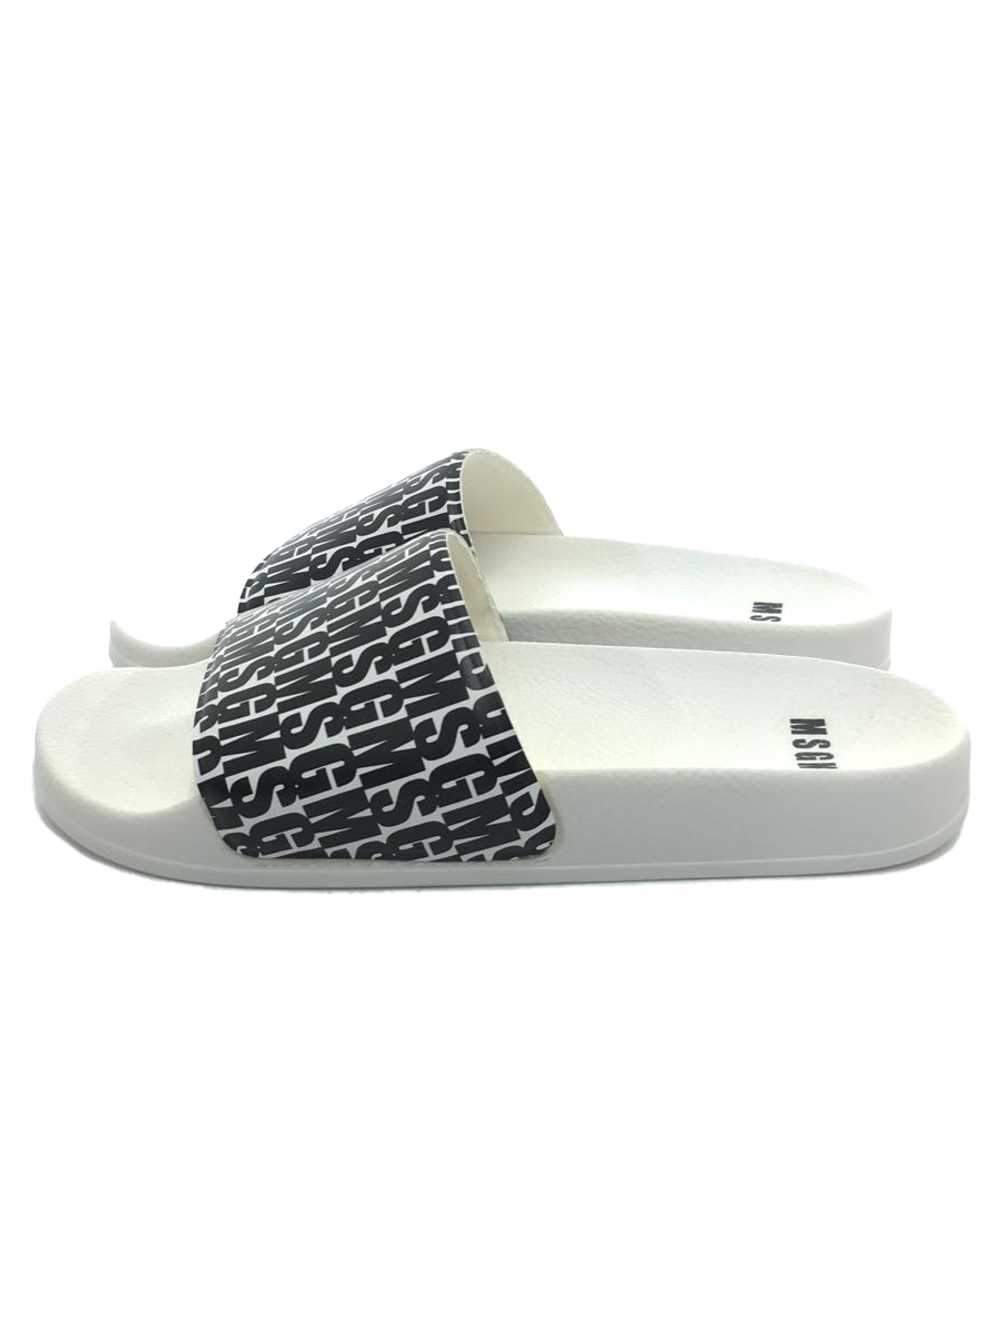 Msgm Sandals/37/White/Pool-Slide Shoes BLp96 - image 1